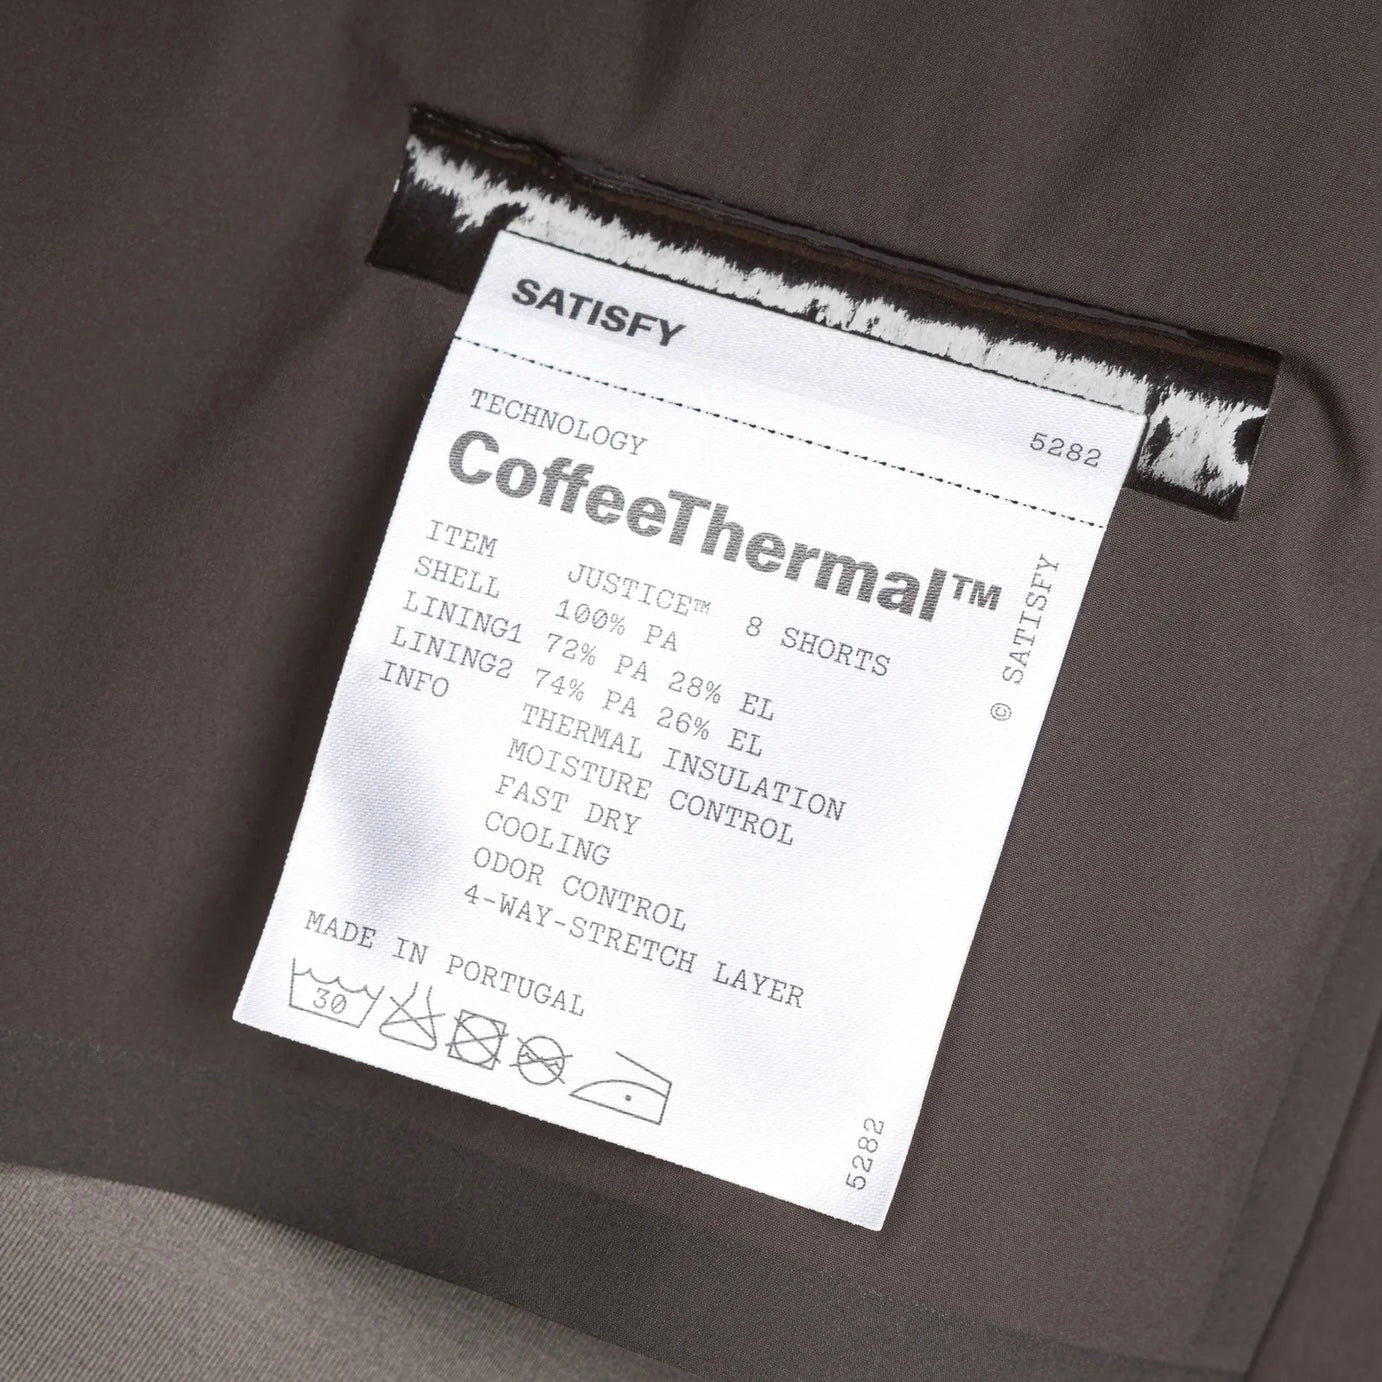 Satisfy - CoffeeThermal™ 8” Shorts (Quicksand)